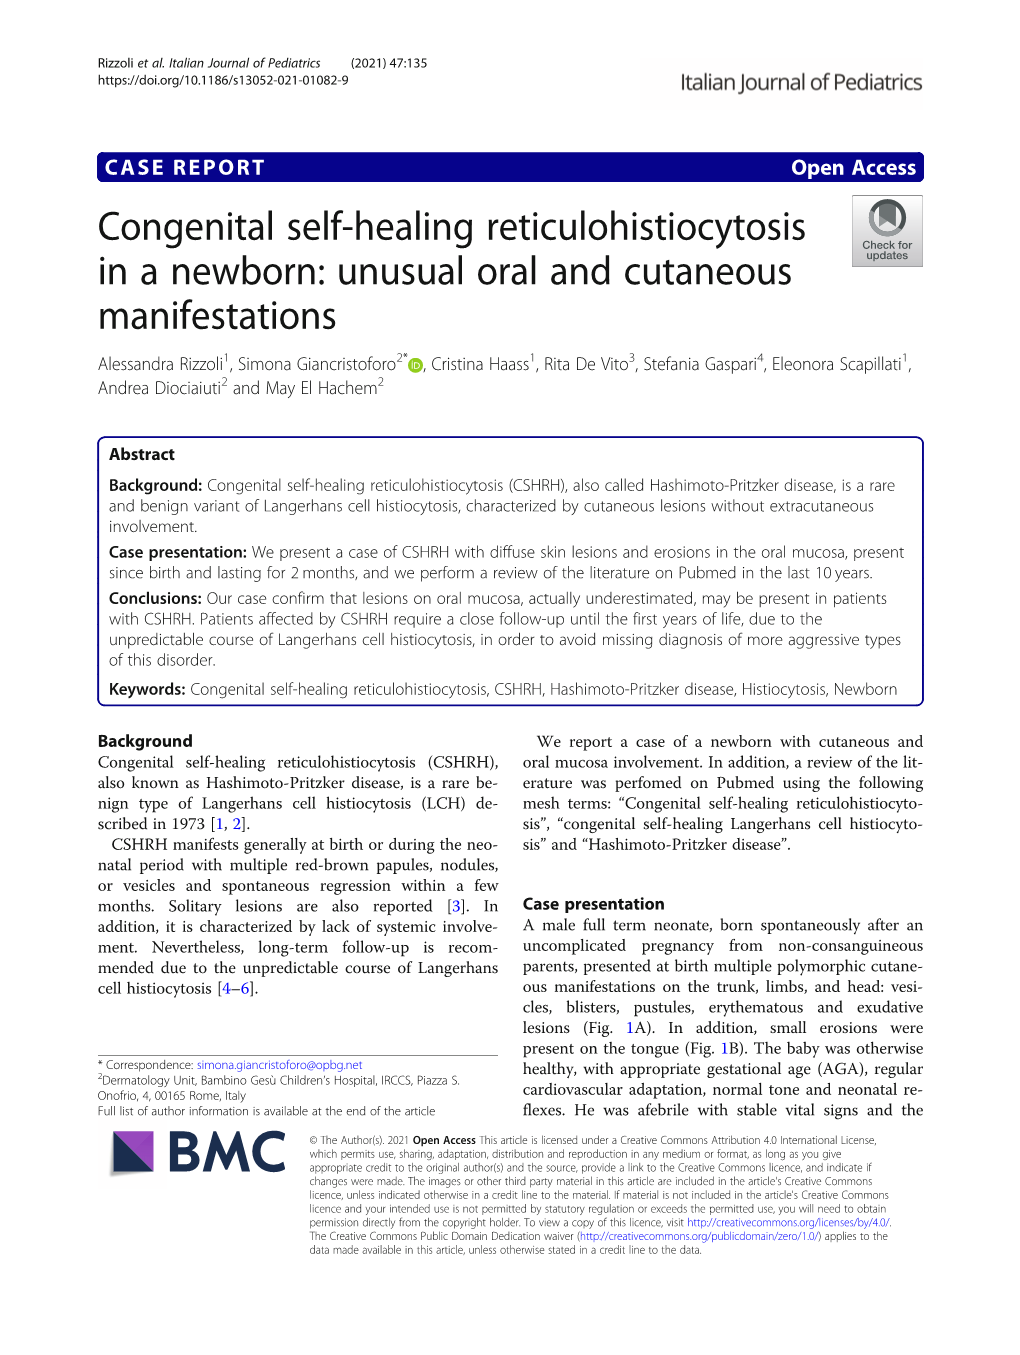 Congenital Self-Healing Reticulohistiocytosis in a Newborn